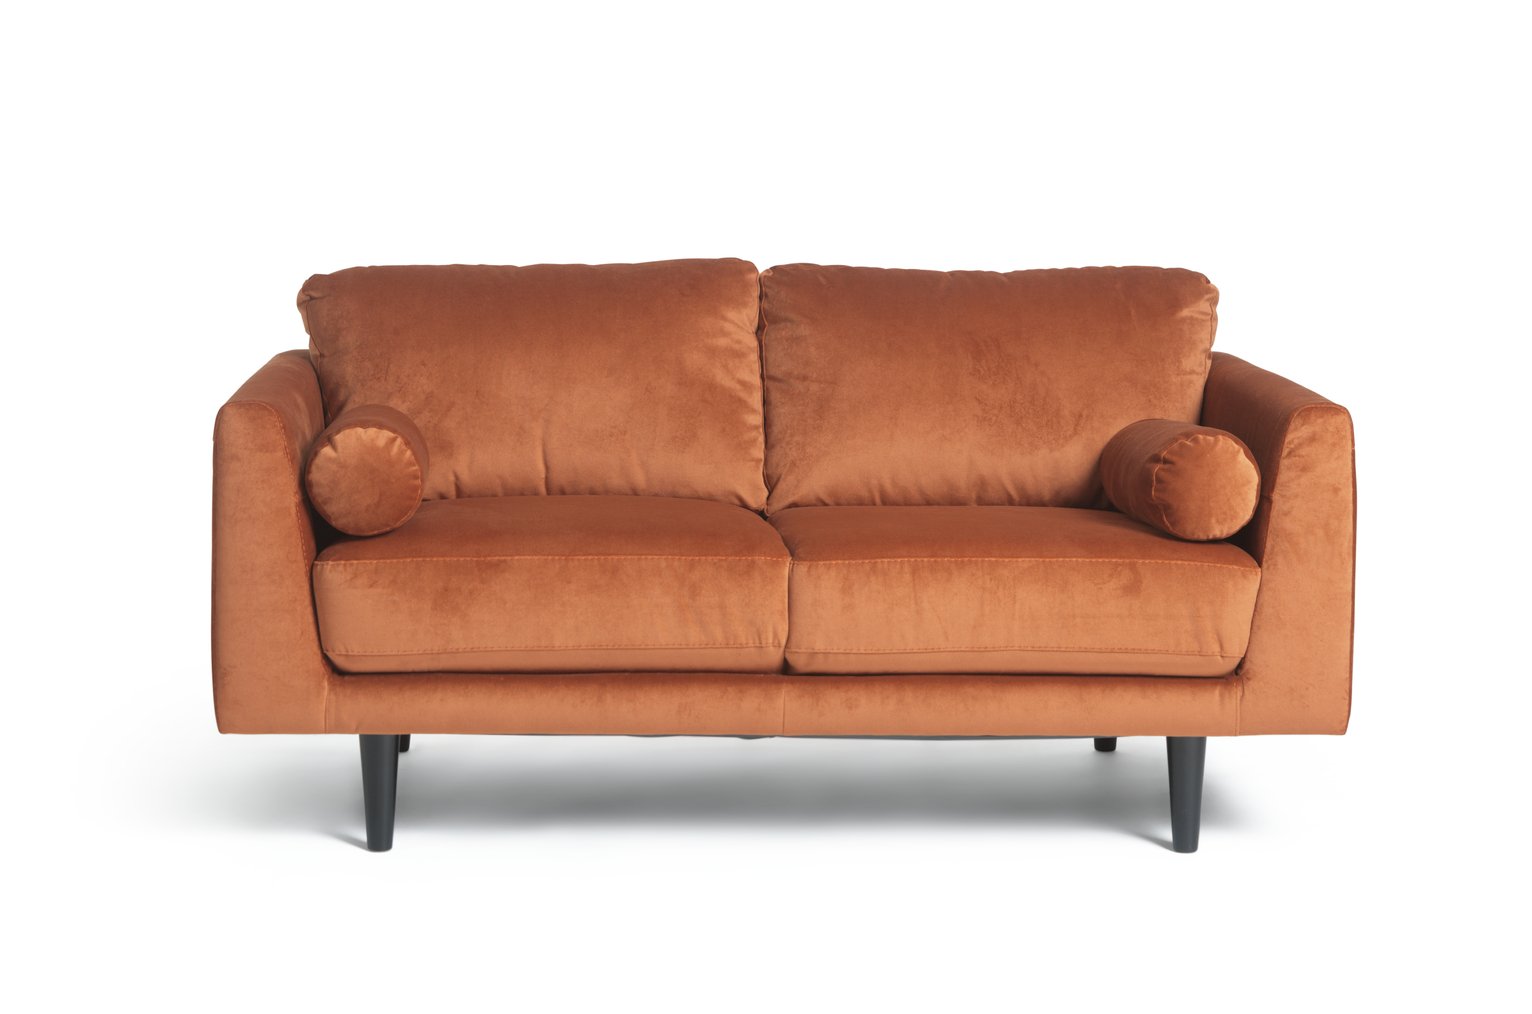 Habitat Jackson 2 Seater Velvet Sofa - Orange